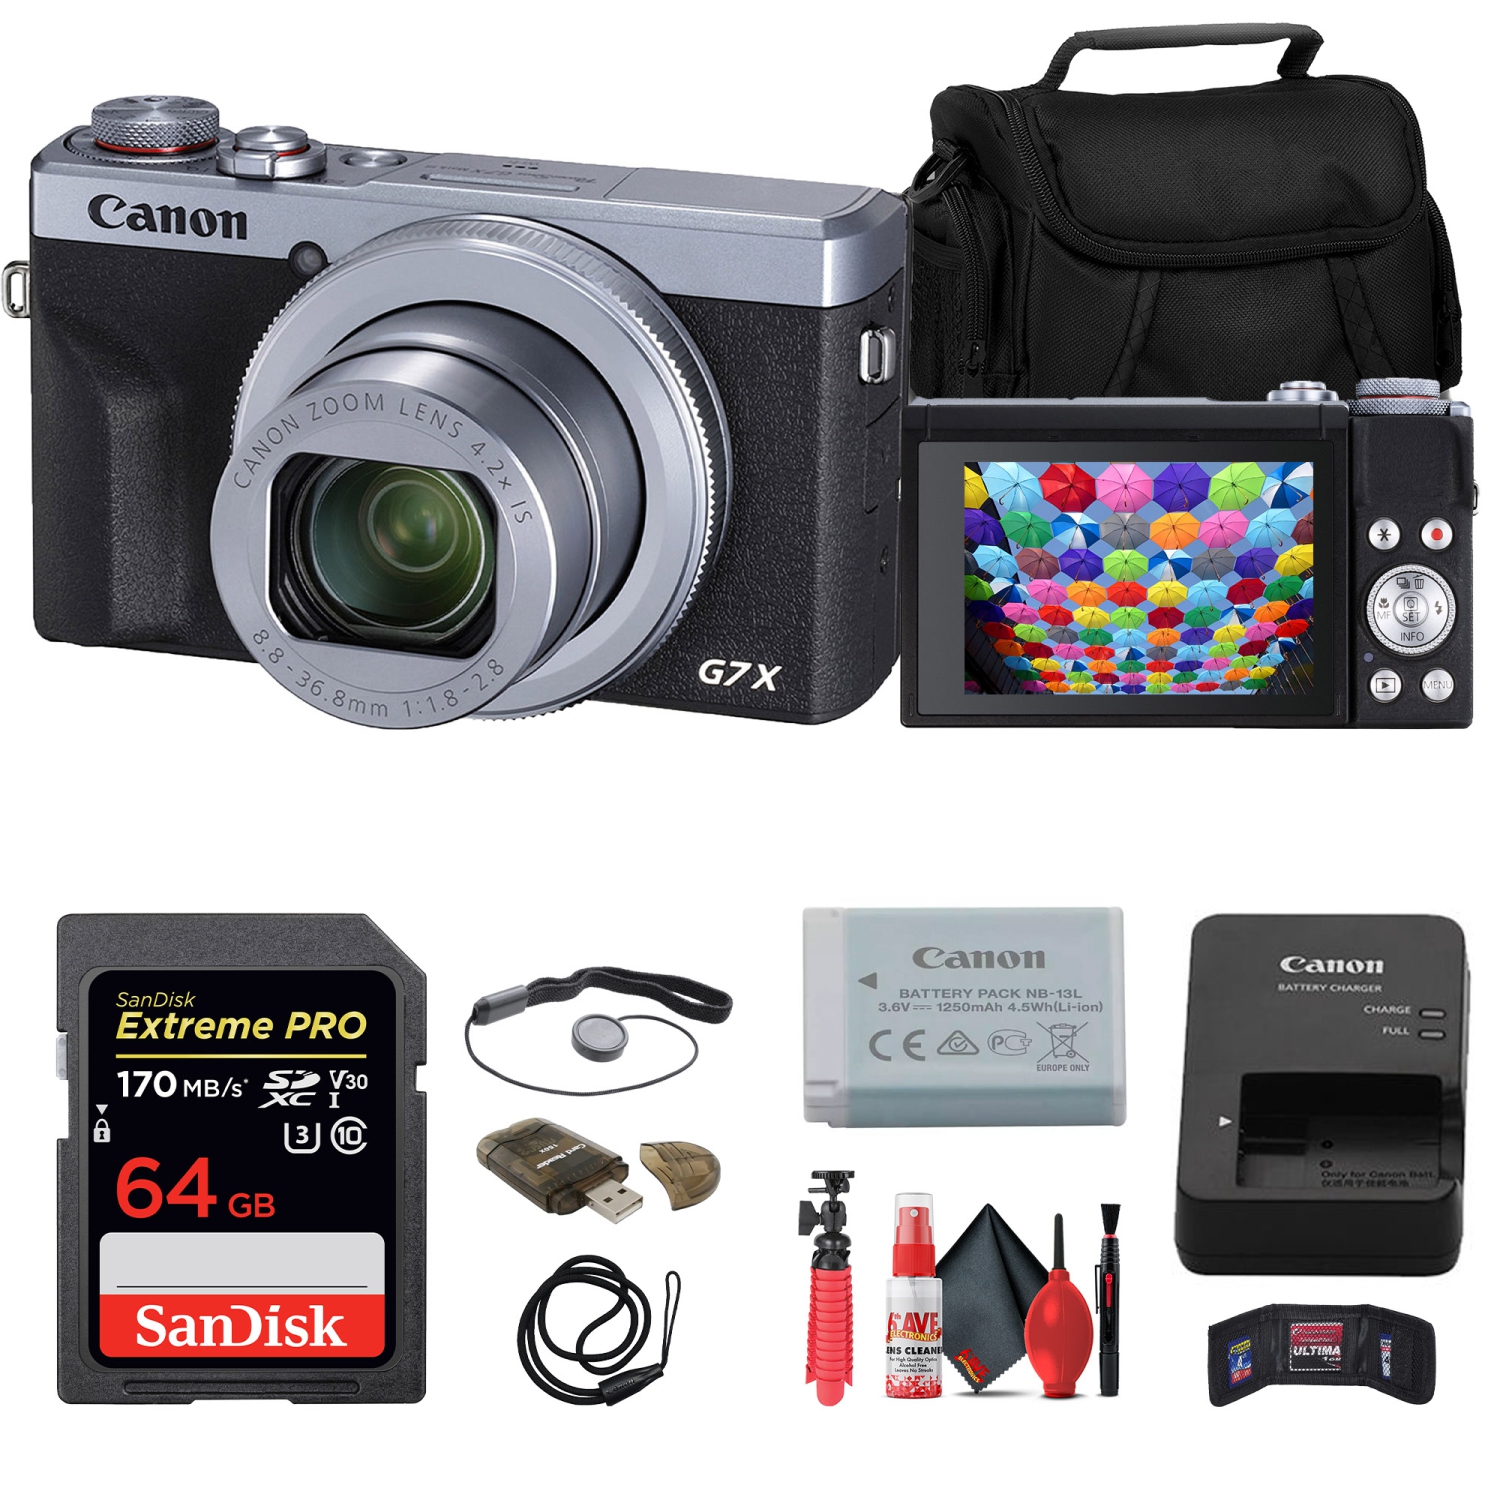 Canon PowerShot G7 X Mark III Digital Camera + 64GB Card + 